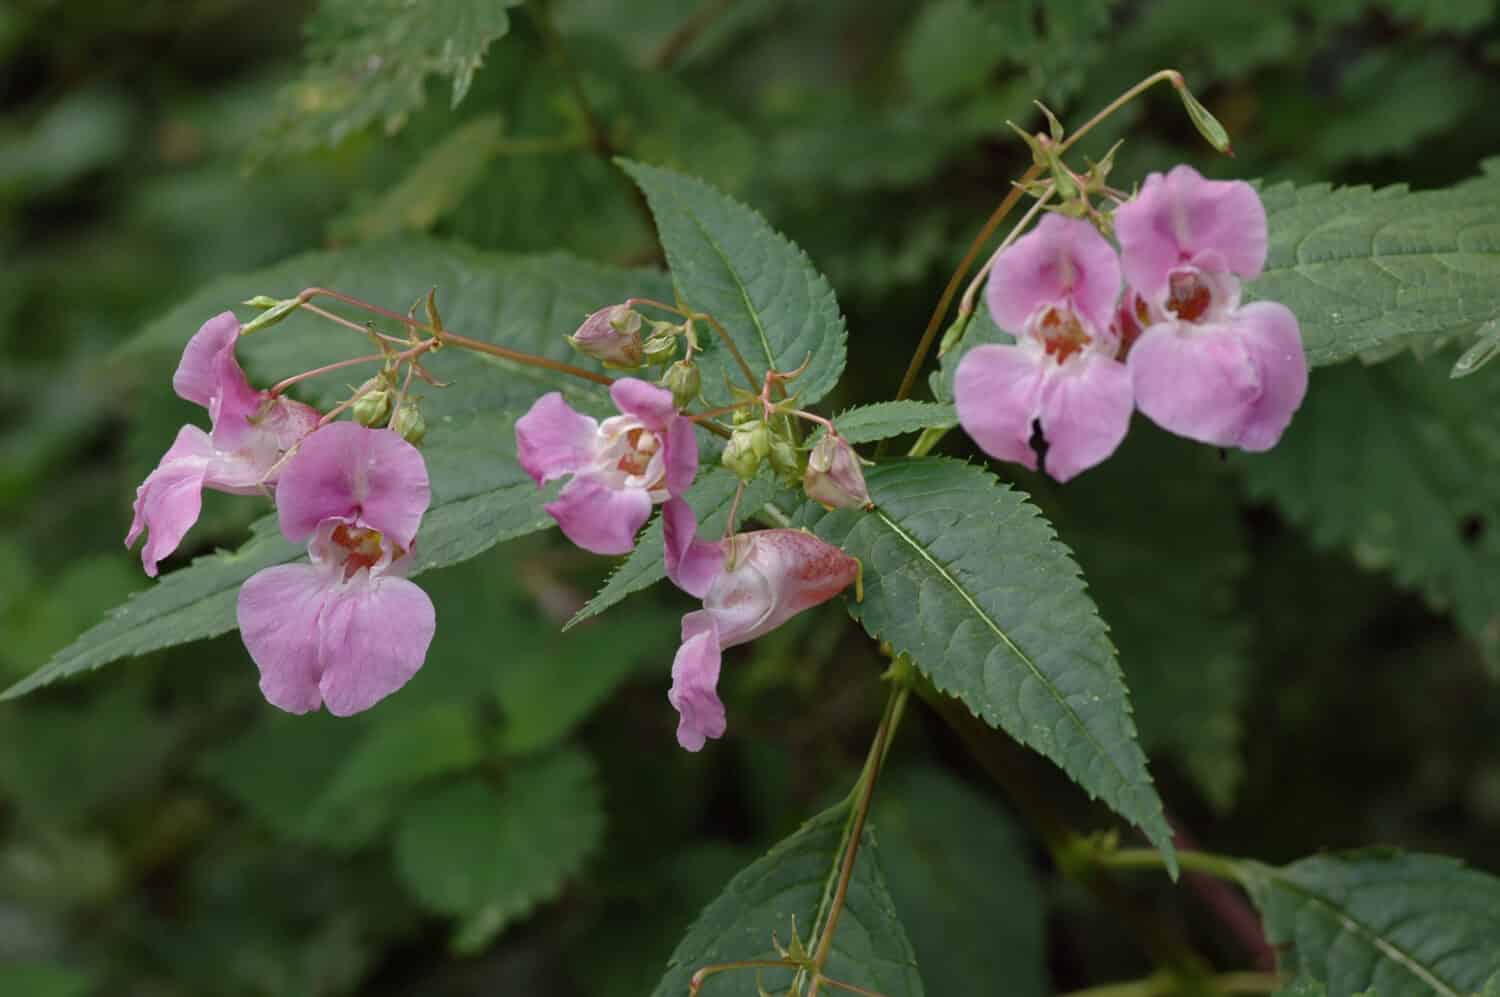 Himalayan Balsam - Impatiens glanduliferaInvasive riverside plant